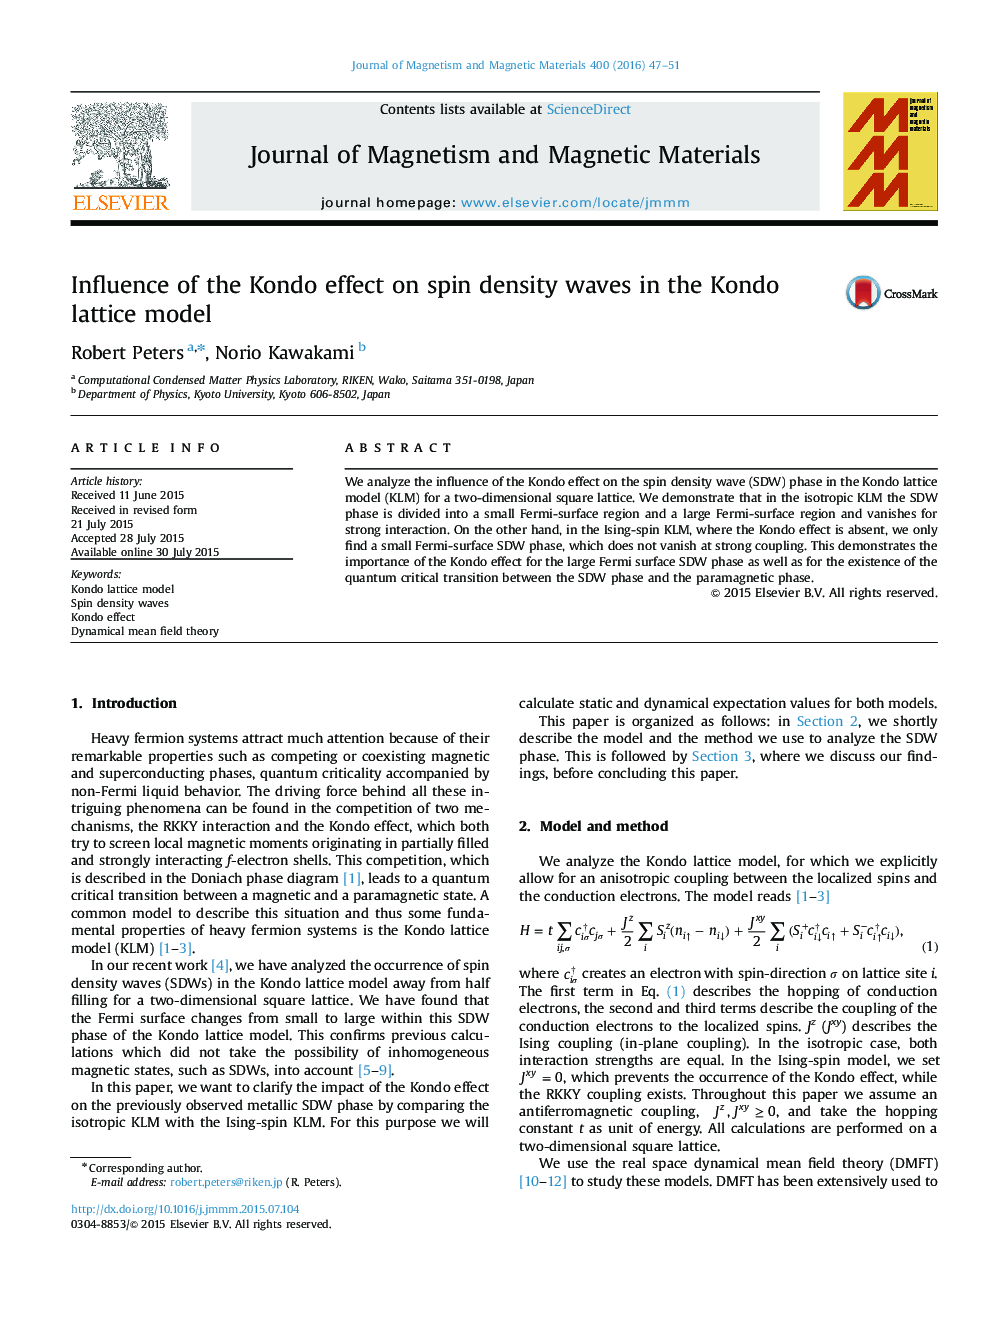 Influence of the Kondo effect on spin density waves in the Kondo lattice model